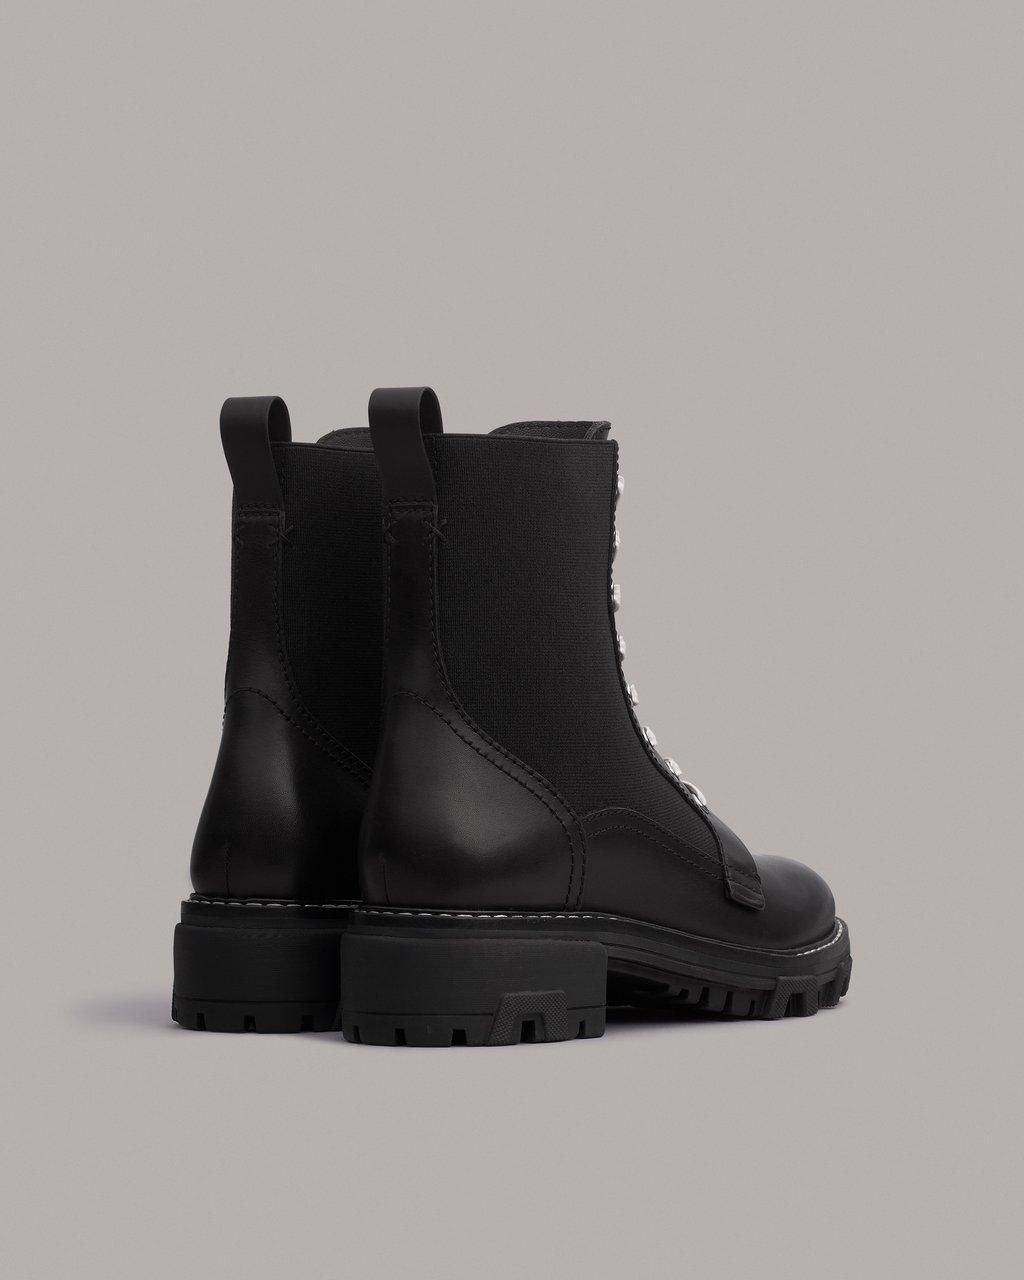 Shiloh boot - leather | rag + bone